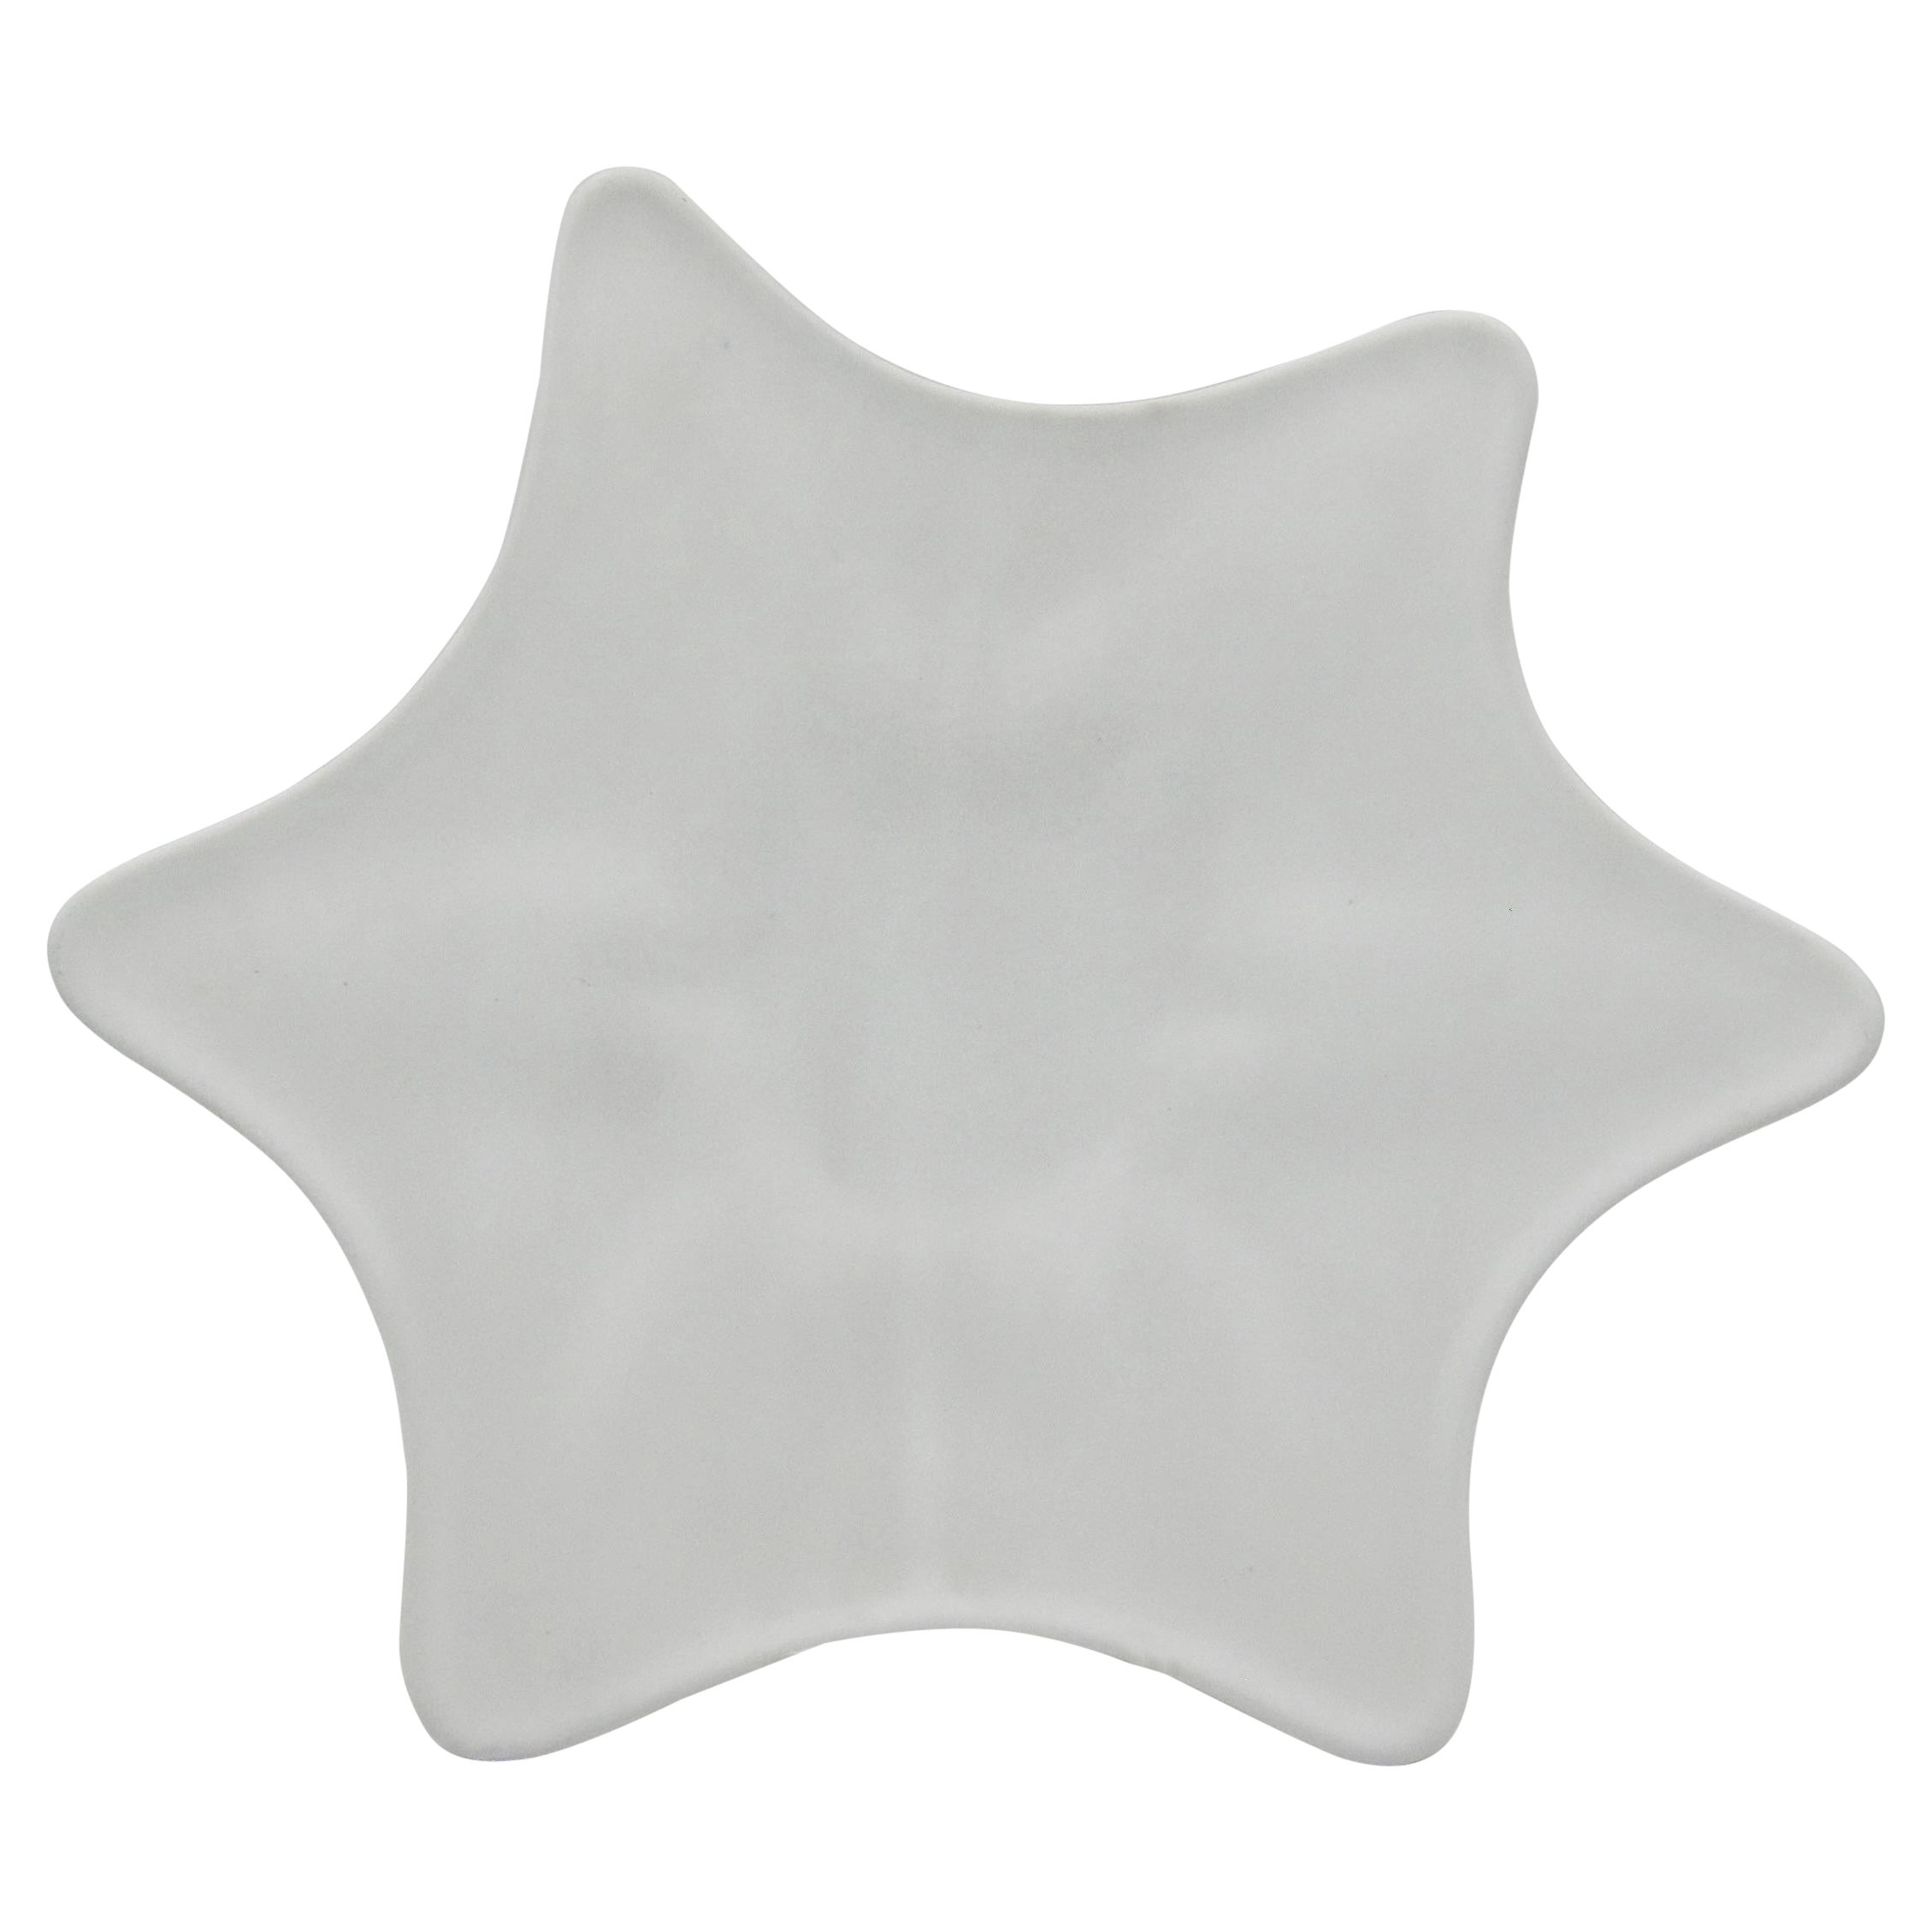 Mildred Scott for Van Briggle Pottery White Star Shaped Tray Platter